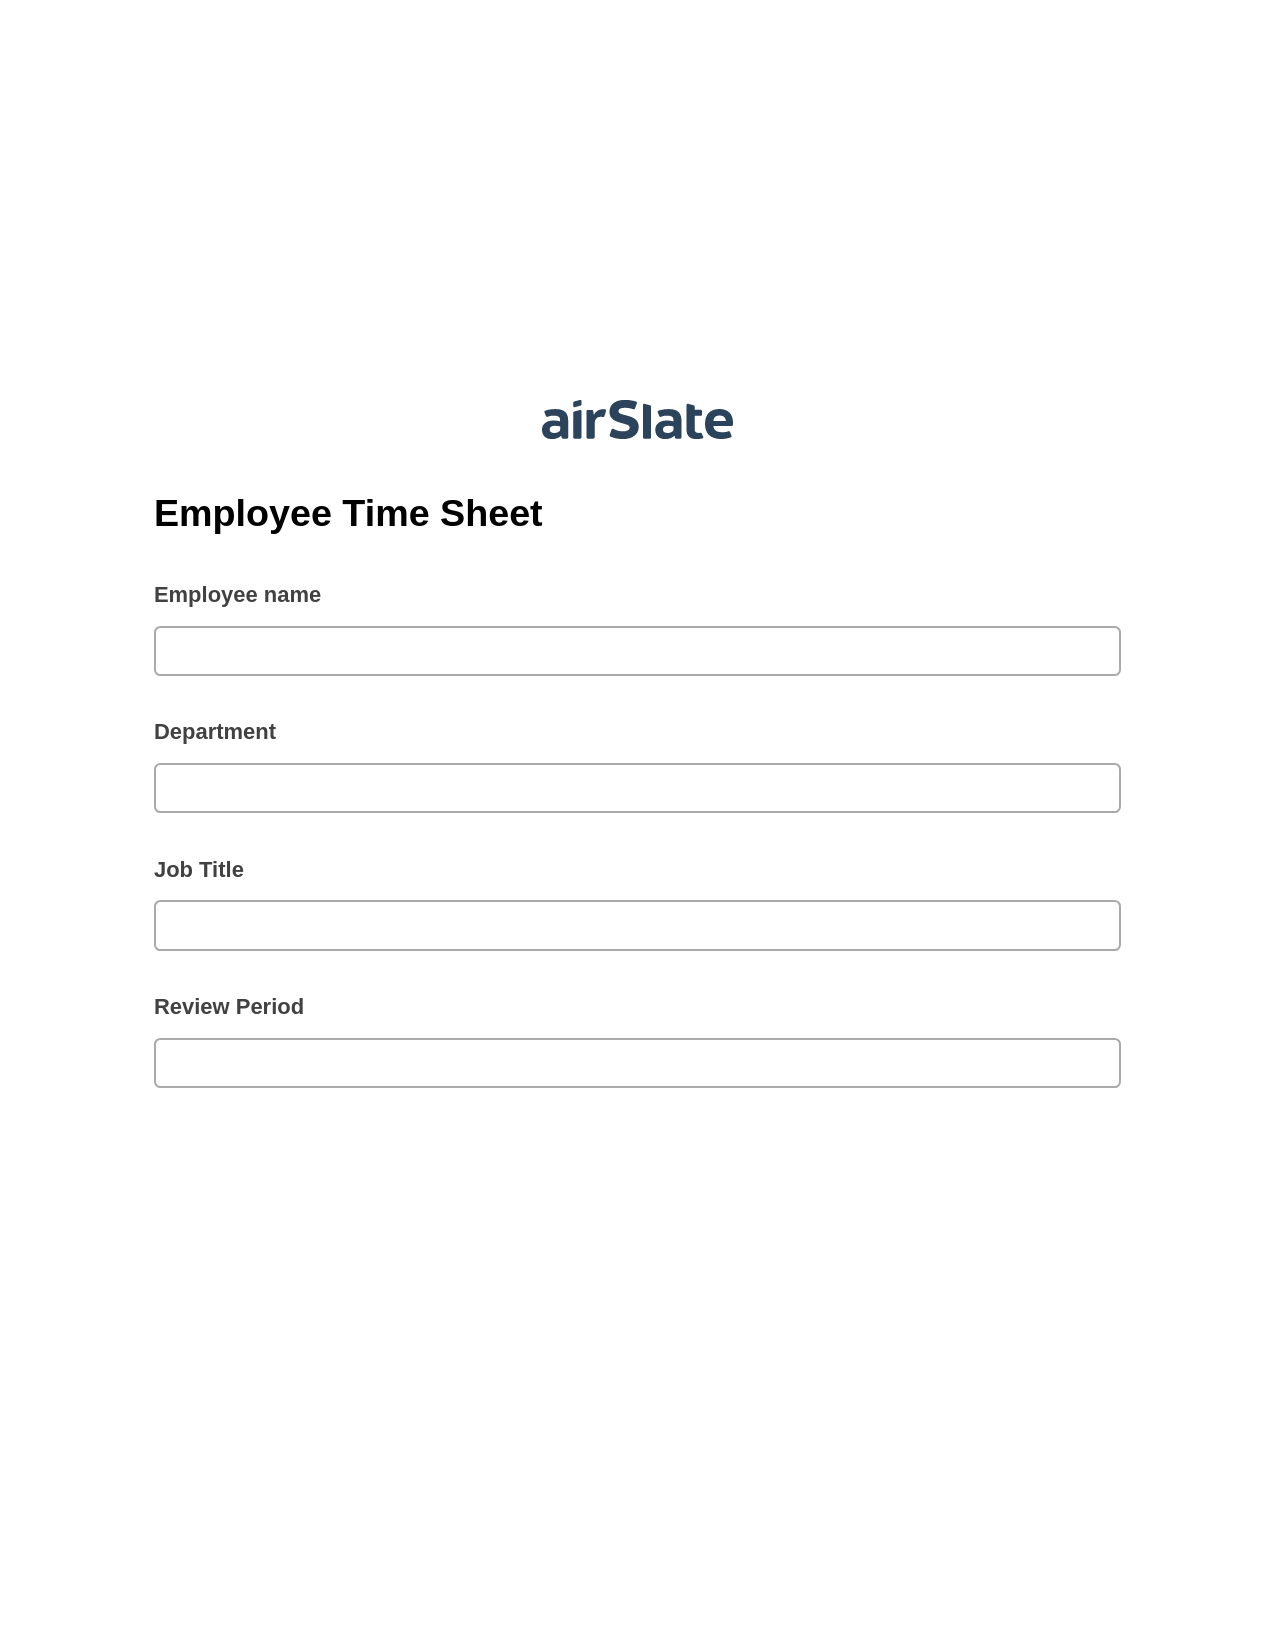 Multirole Employee Time Sheet Pre-fill from Excel Spreadsheet Bot, Create Salesforce Records Bot, Webhook Postfinish Bot